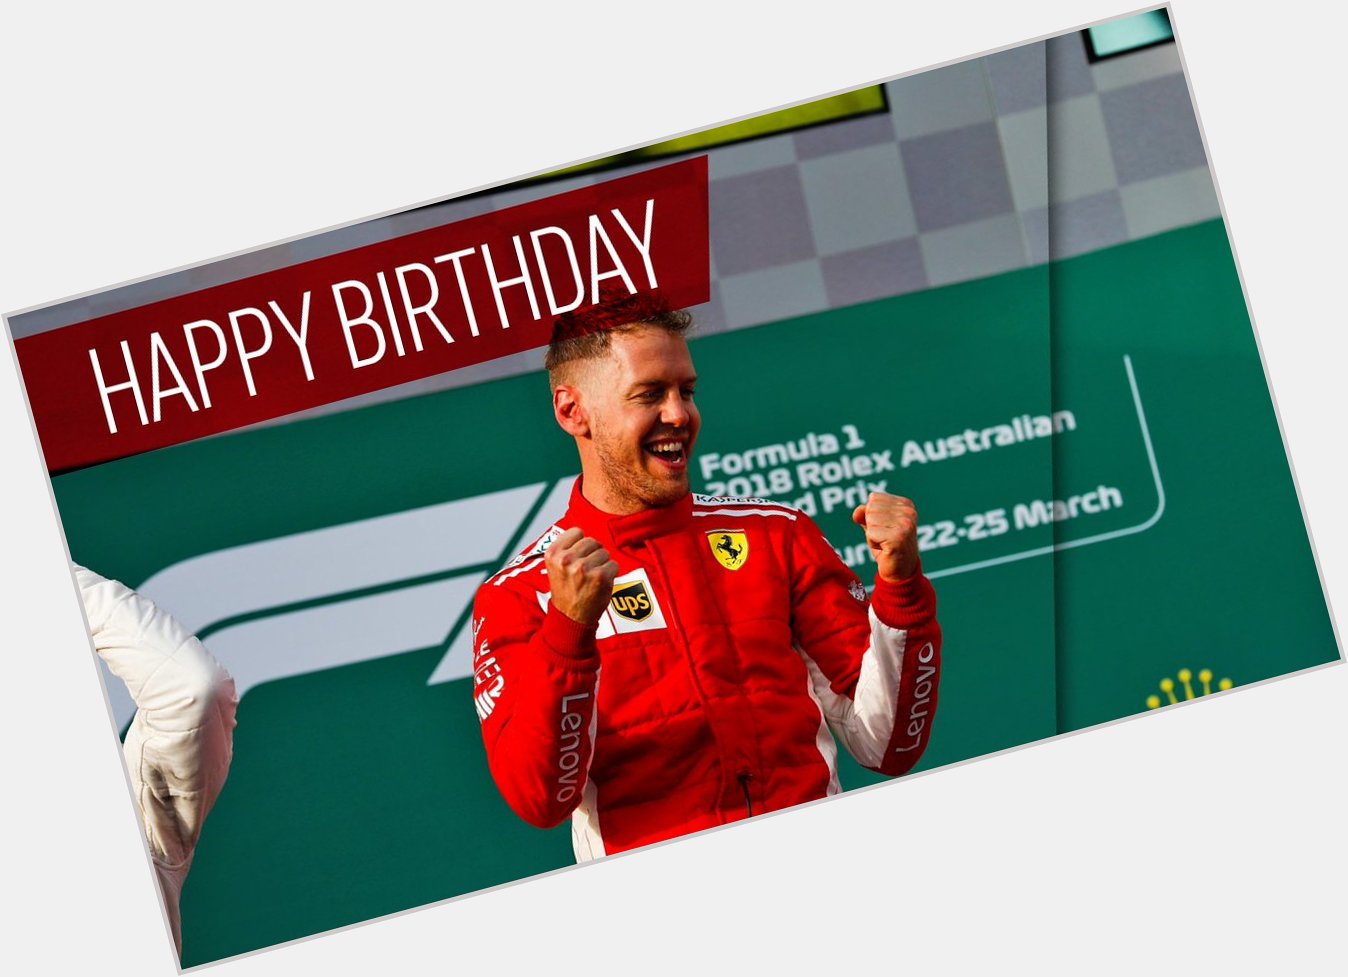 Happy birthday, Sebastian Vettel! The driver turns 31 today  